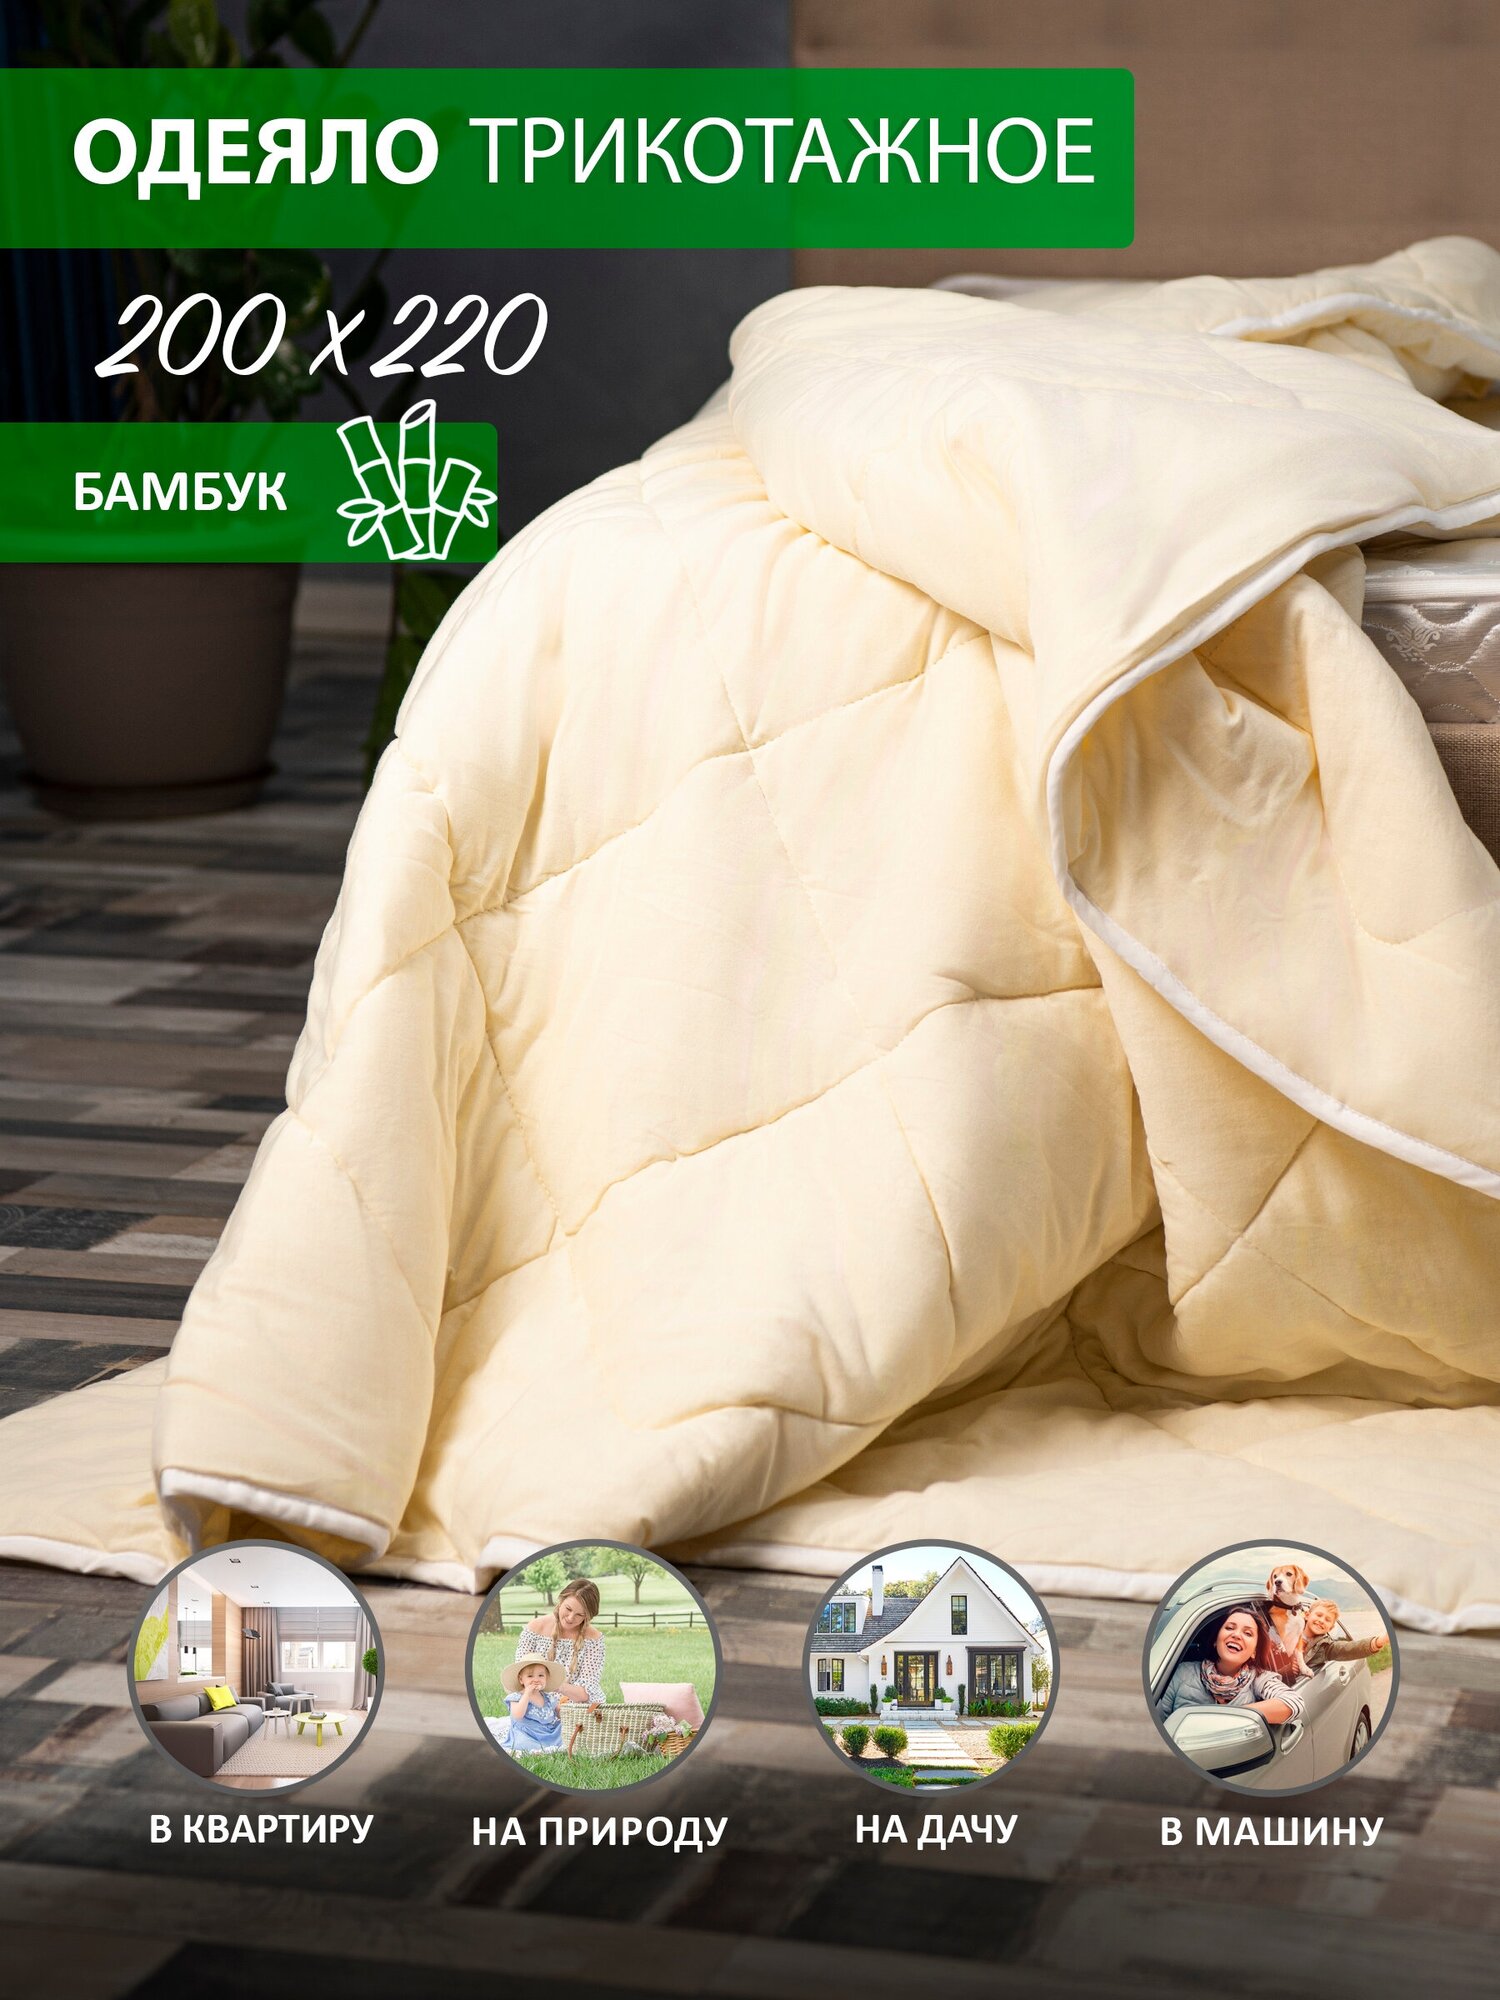 Трикотажное одеяло евро KUPU-KUPU "Бамбук" 200х220 - фотография № 1